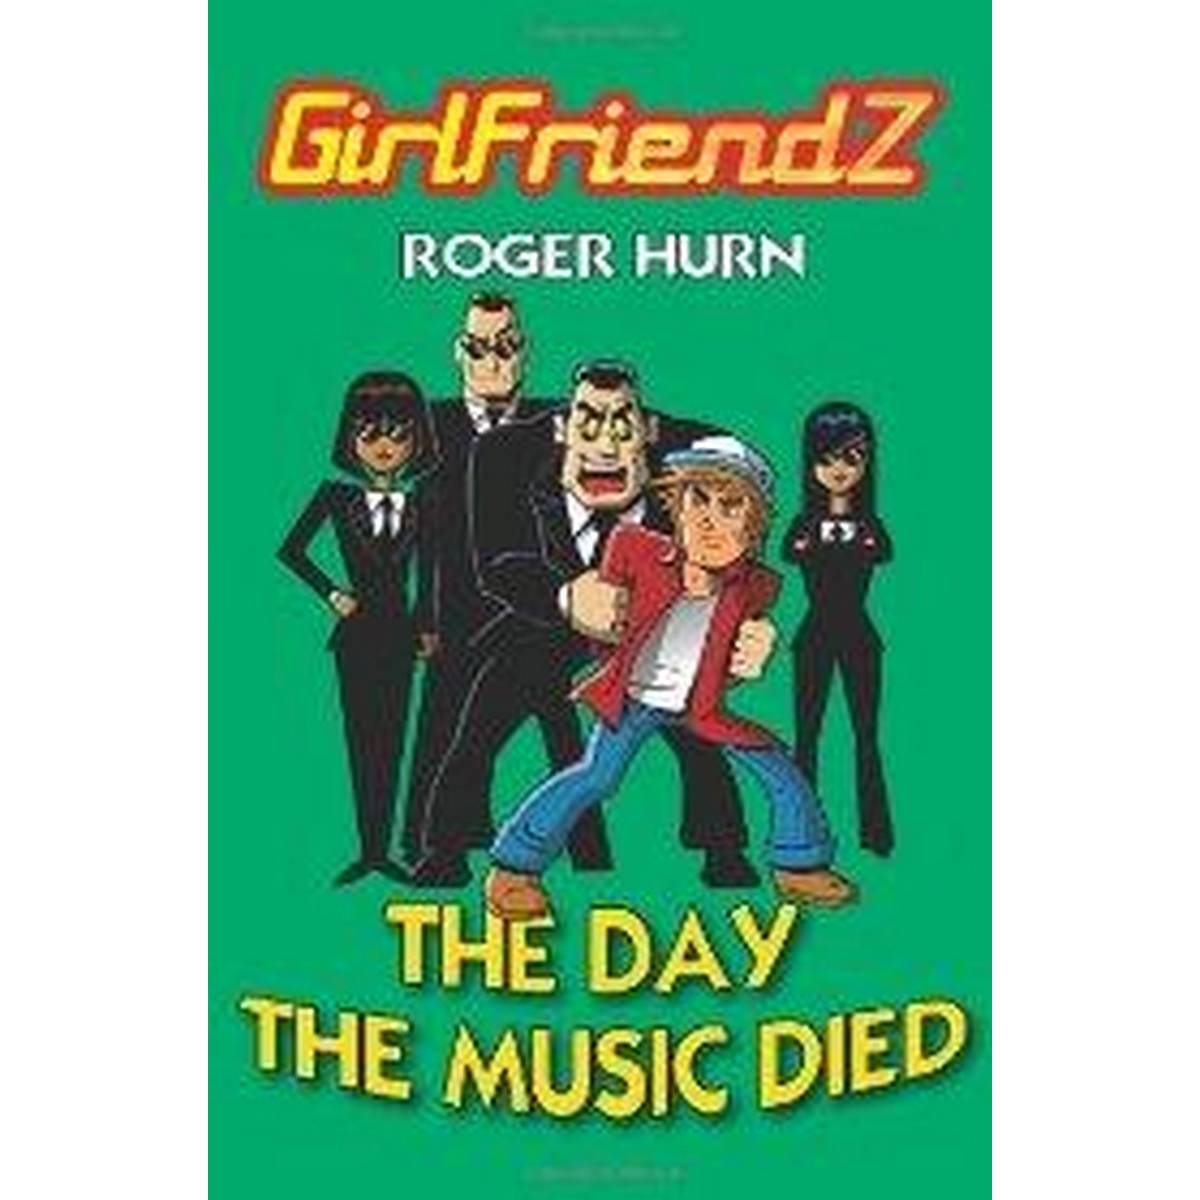 GirlfriendZ 'The Day the Music Died': 1